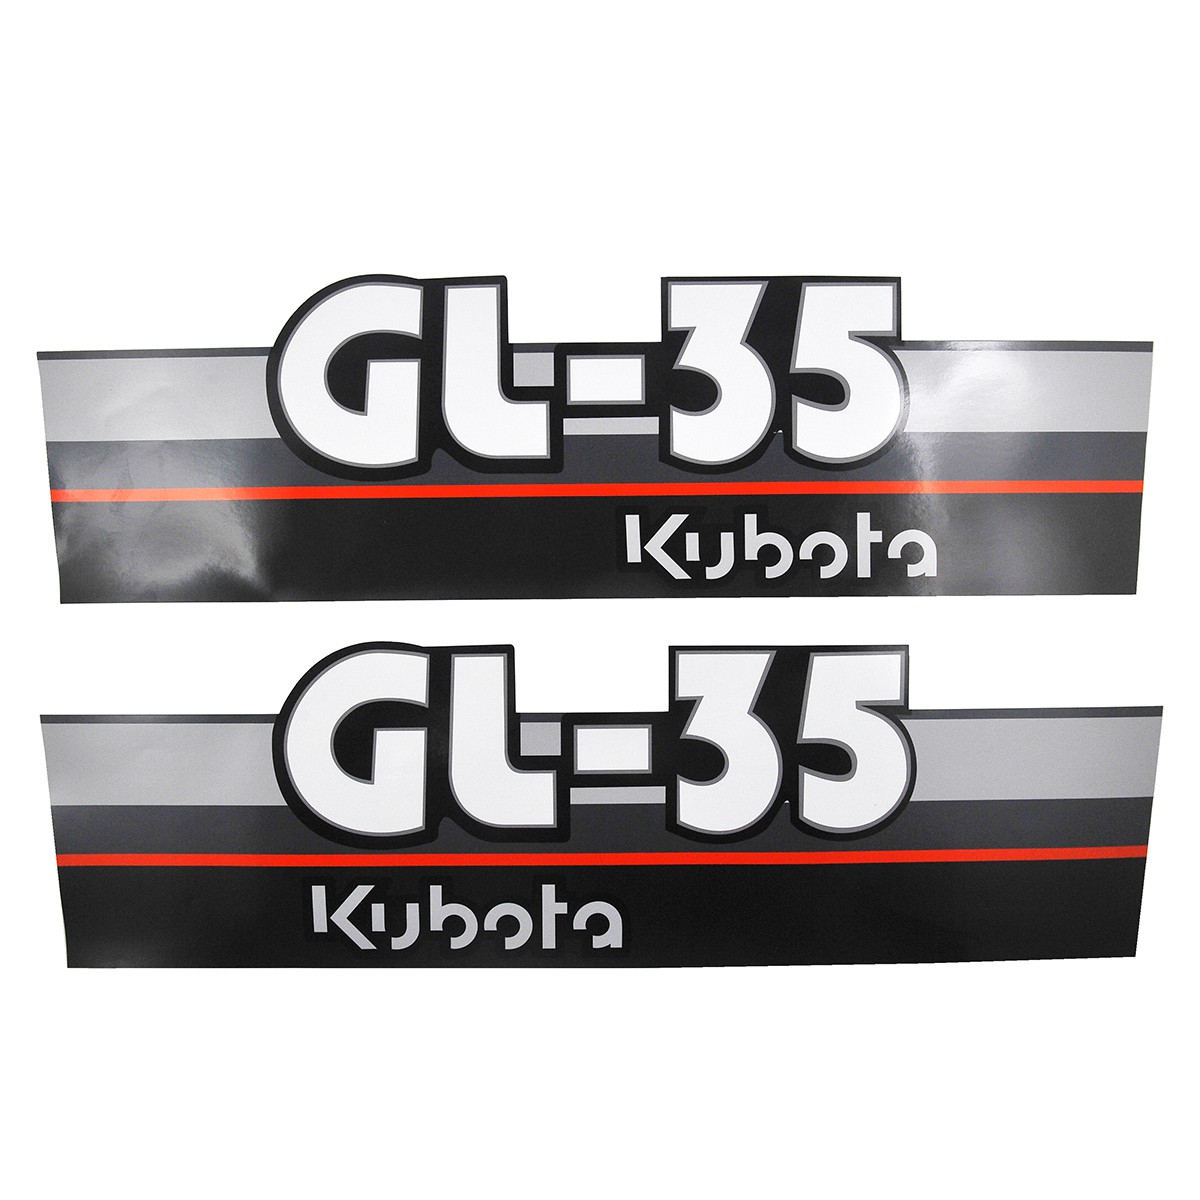 Naklejki Kubota GL35